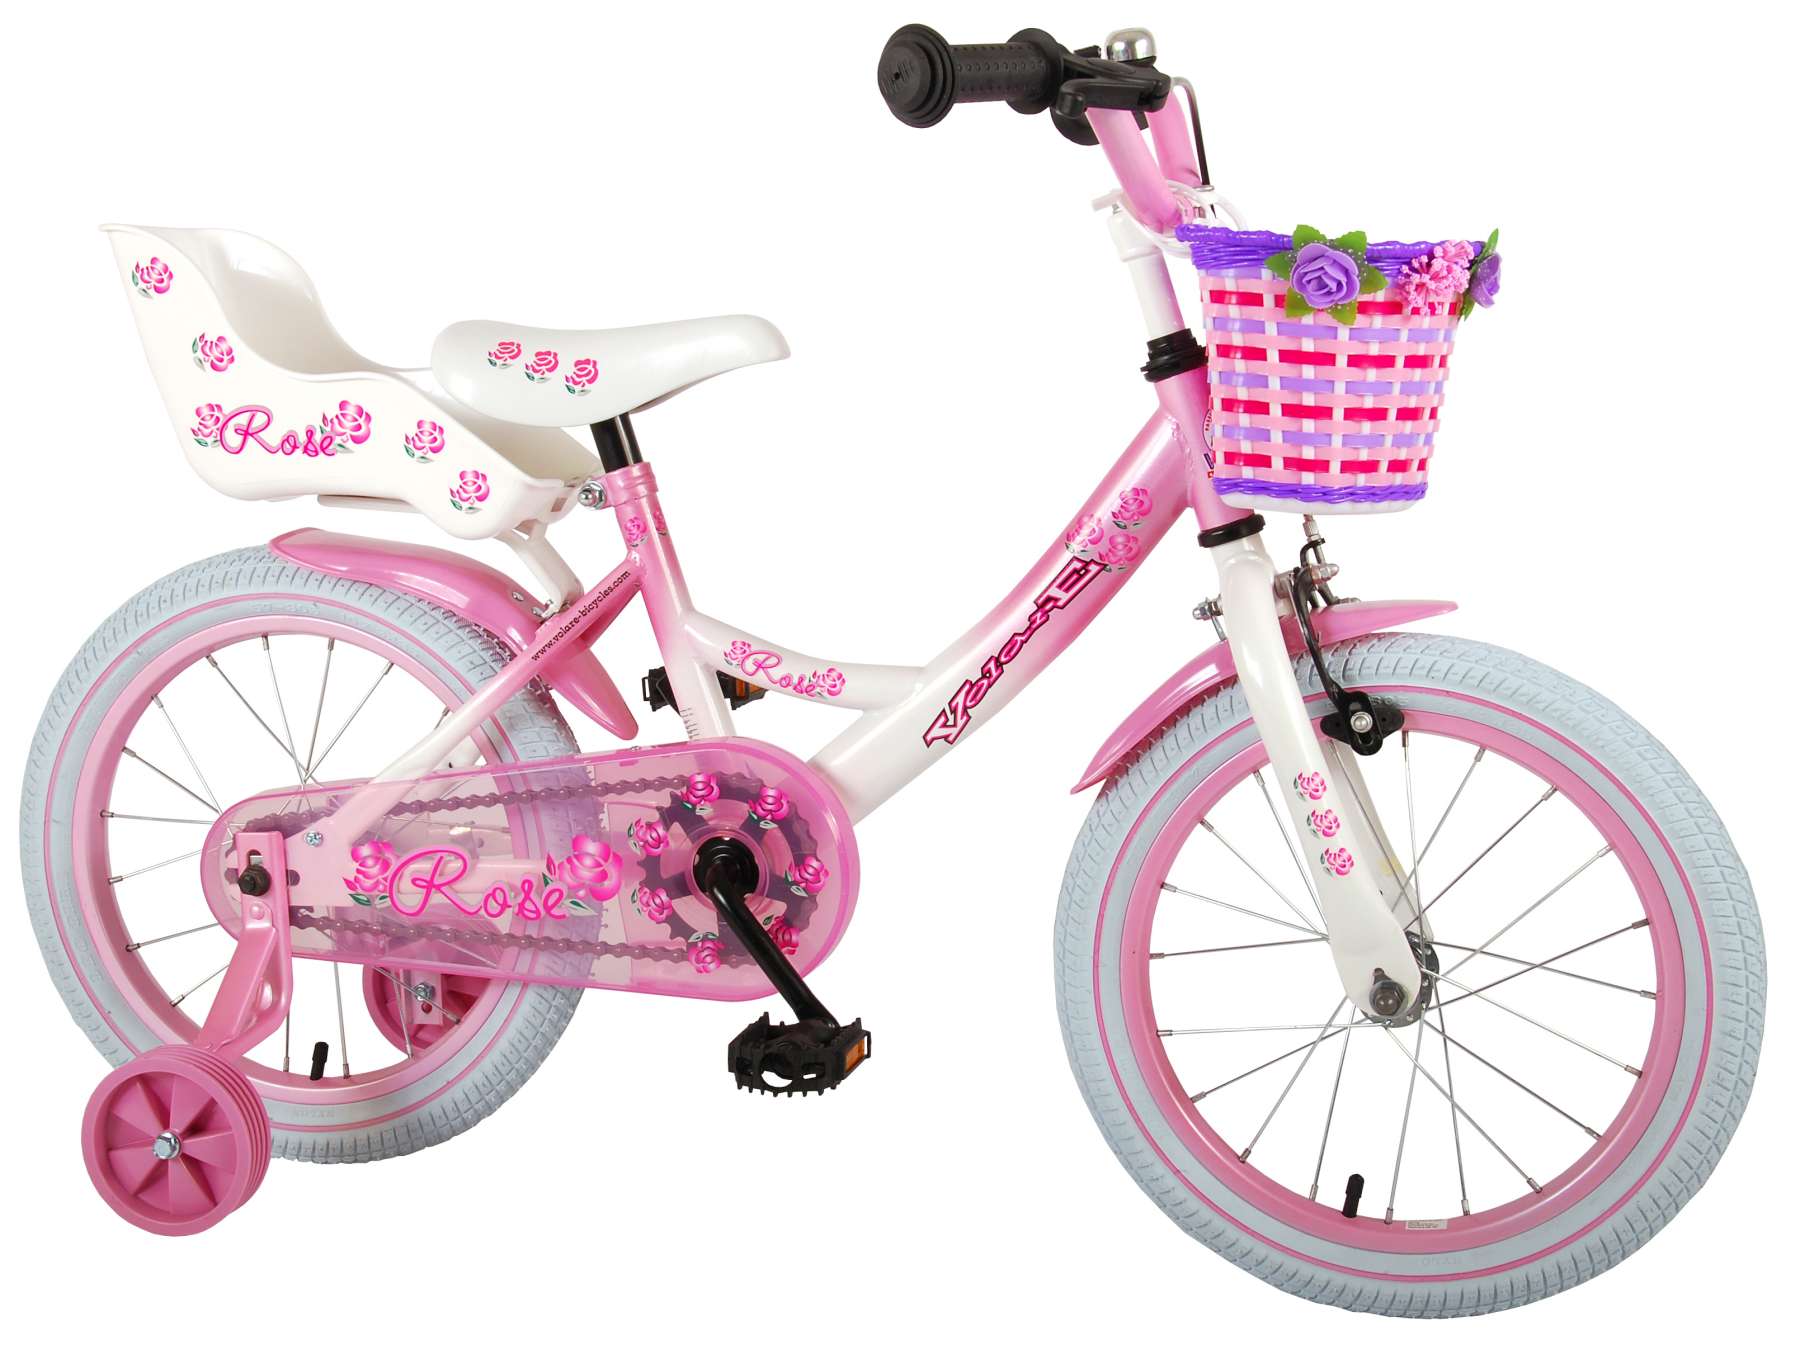 16" Kinderfahrrad Mädchenfahrrad Kinderrad Fahrrad Spielrad Rosa Xmas Geschenk 